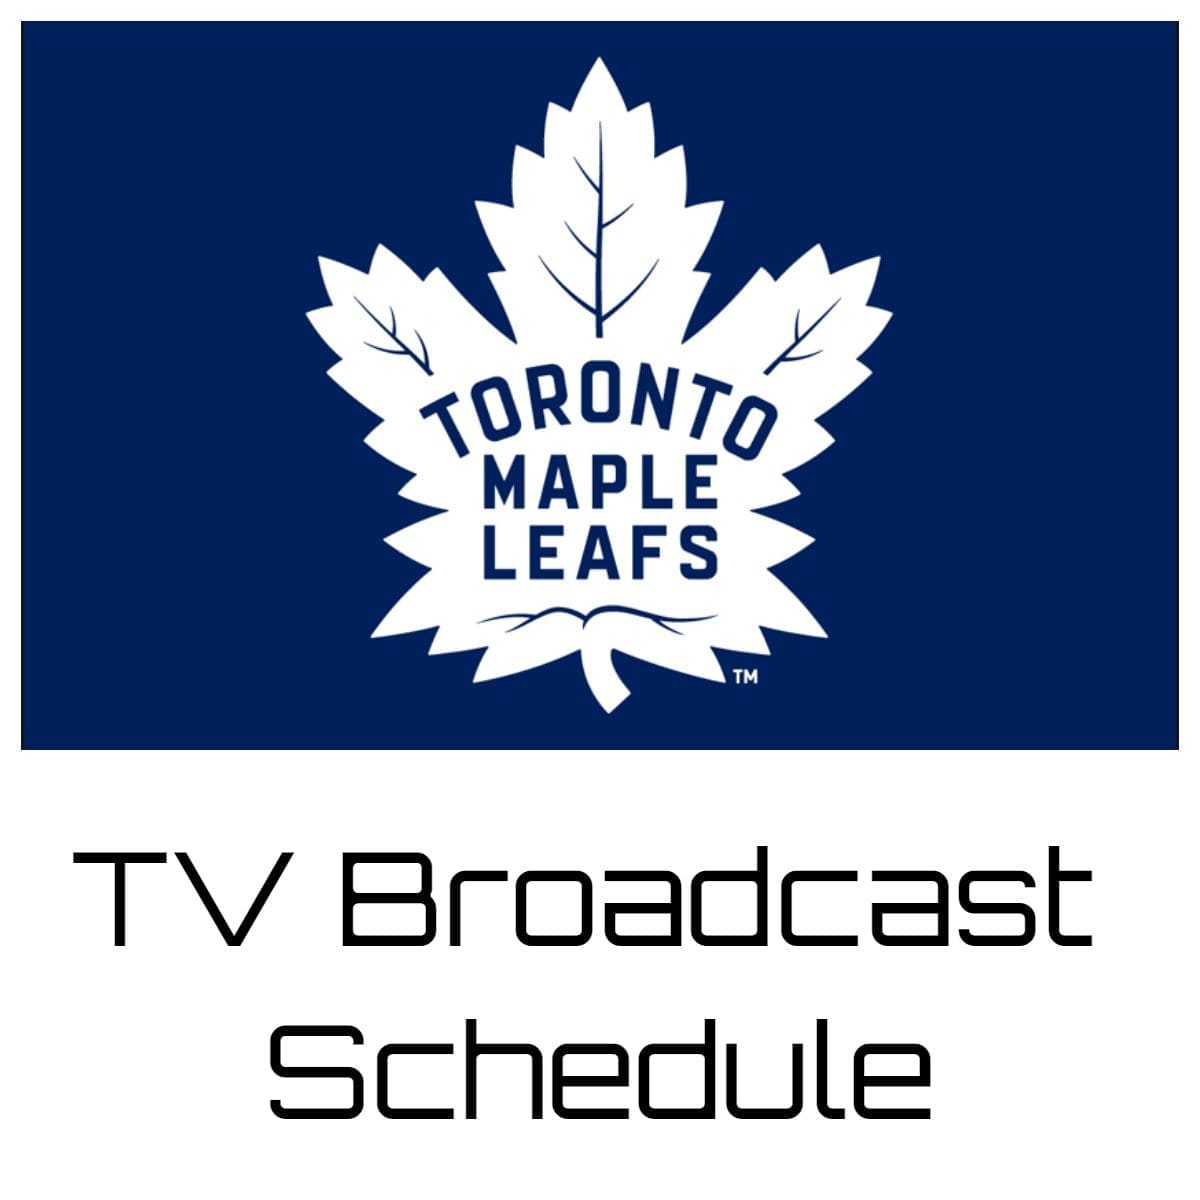 Toronto Maple Leafs TV Broadcast Schedule